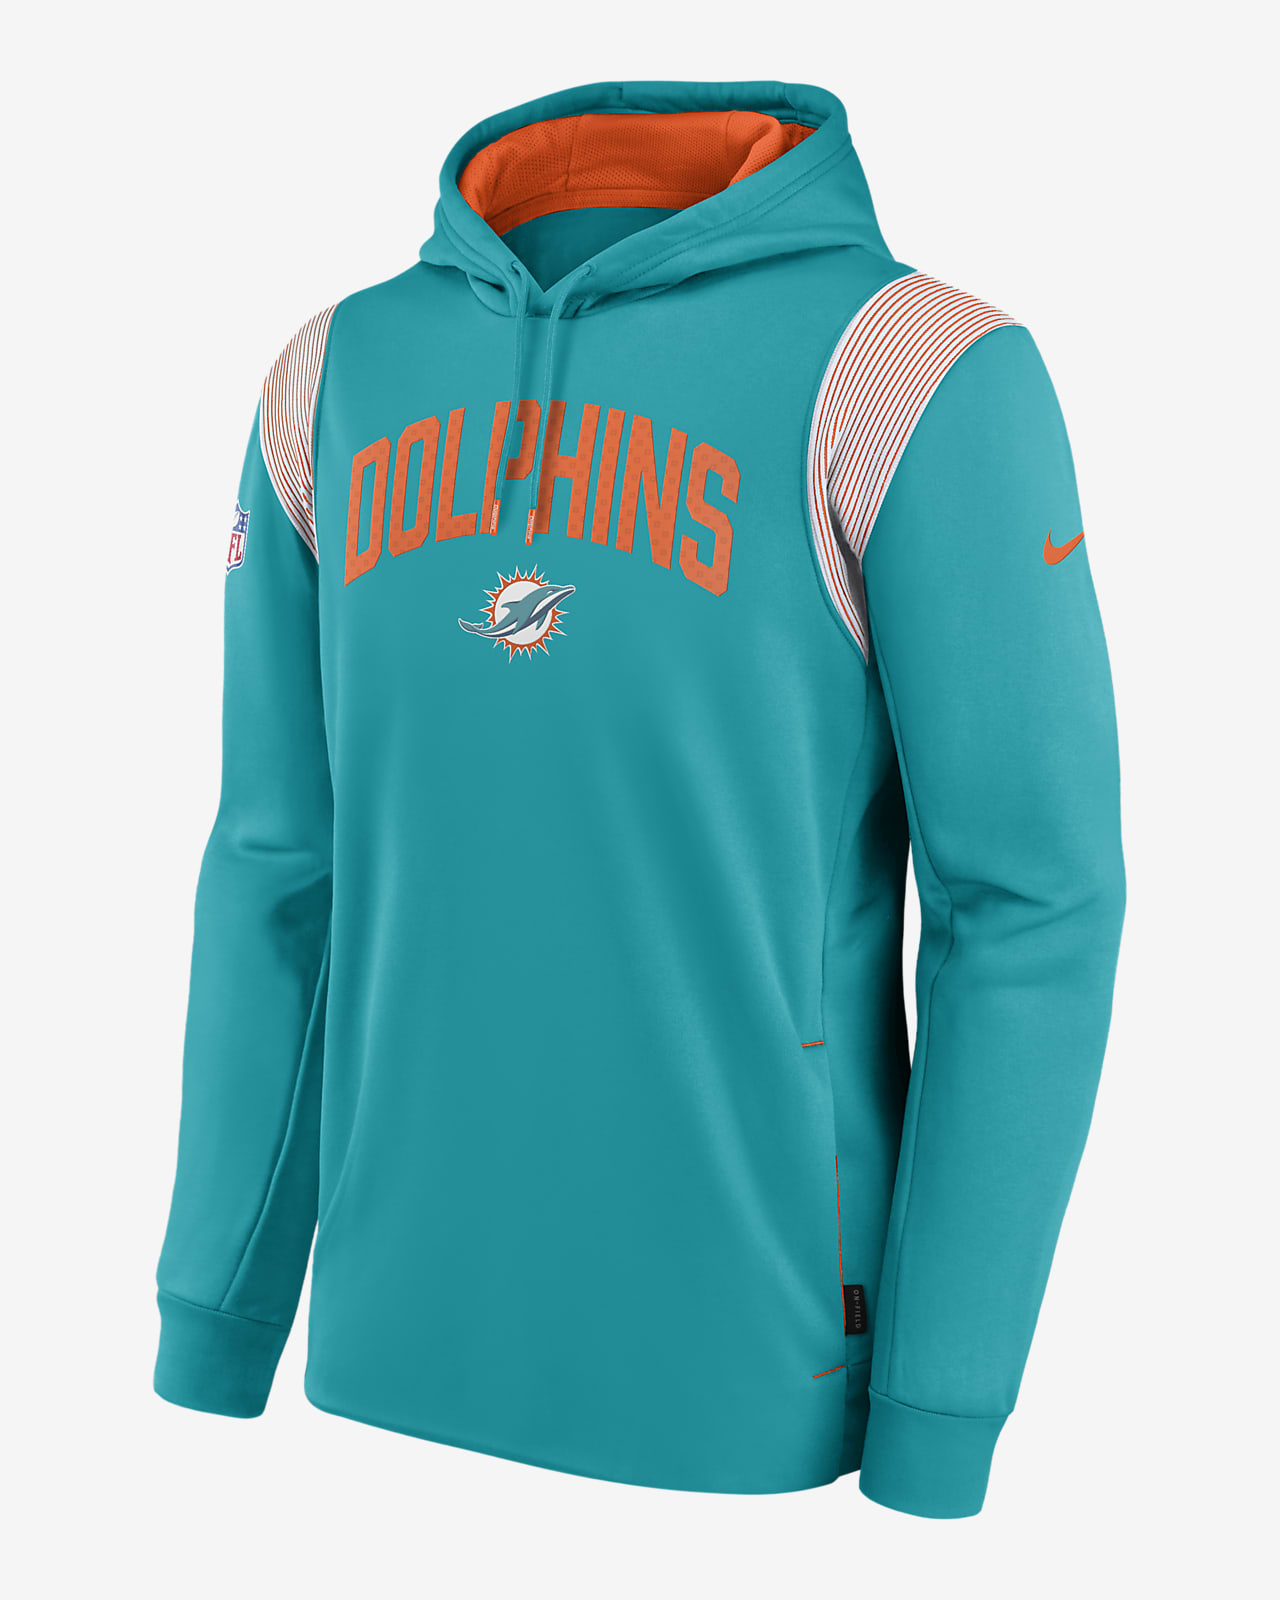 miami dolphins hoodies cheap